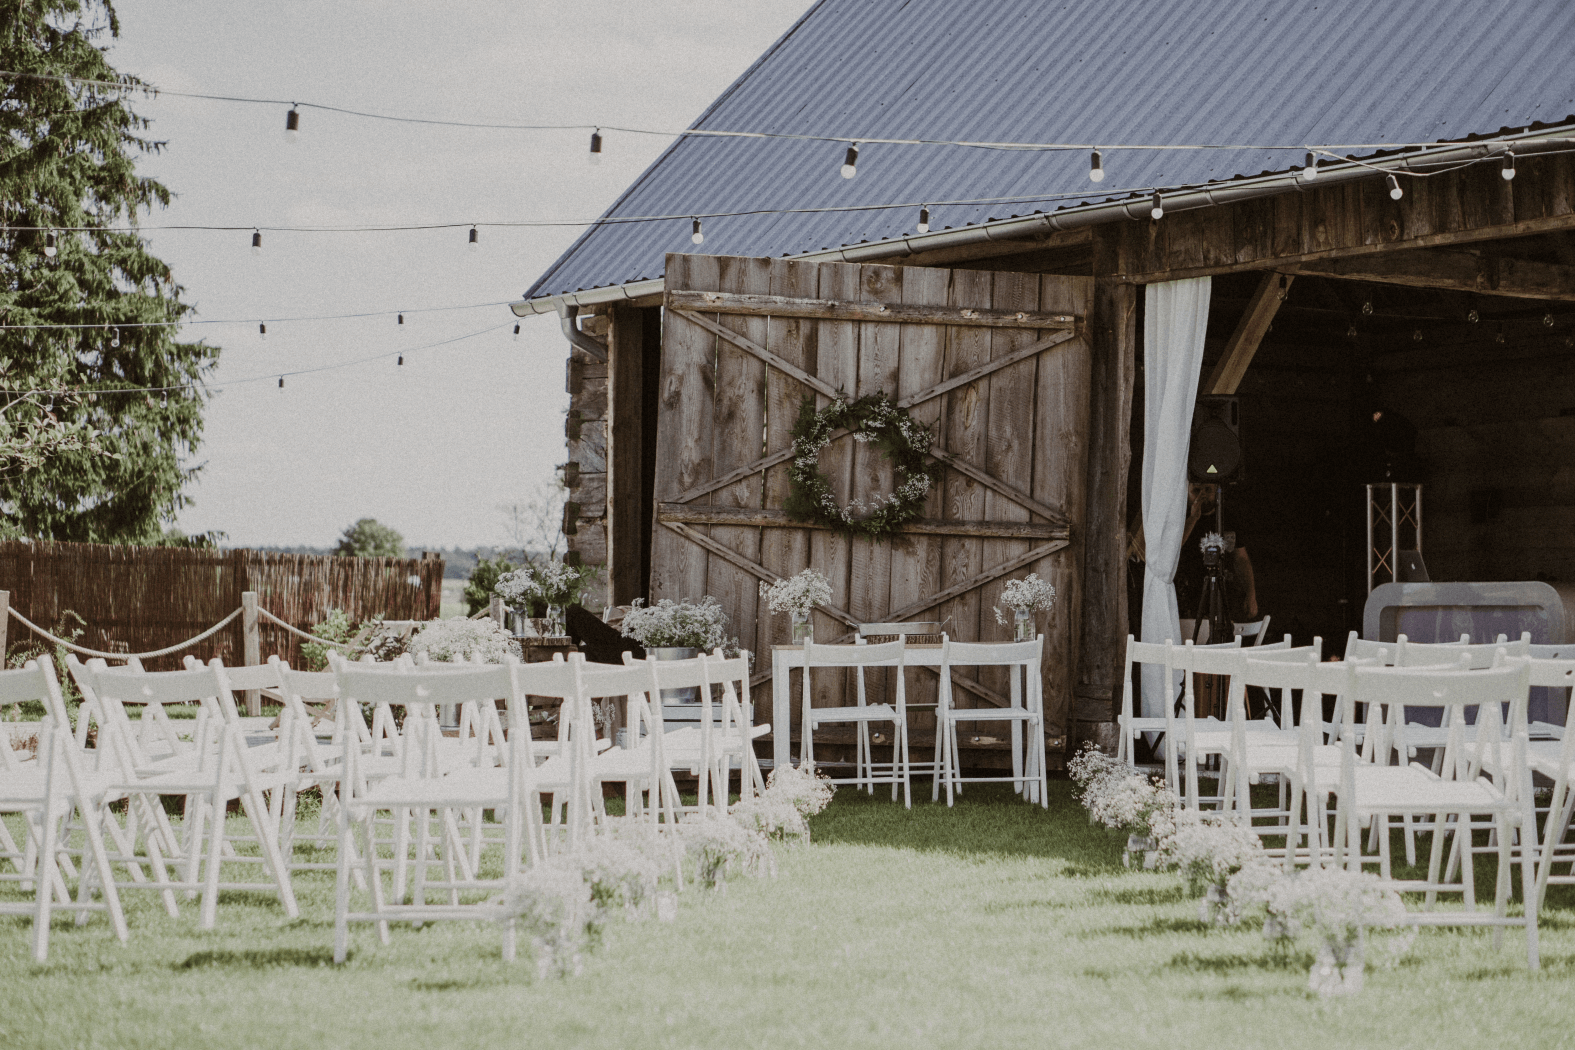 rustykalne wesele w stodole _ Design Your Wedding